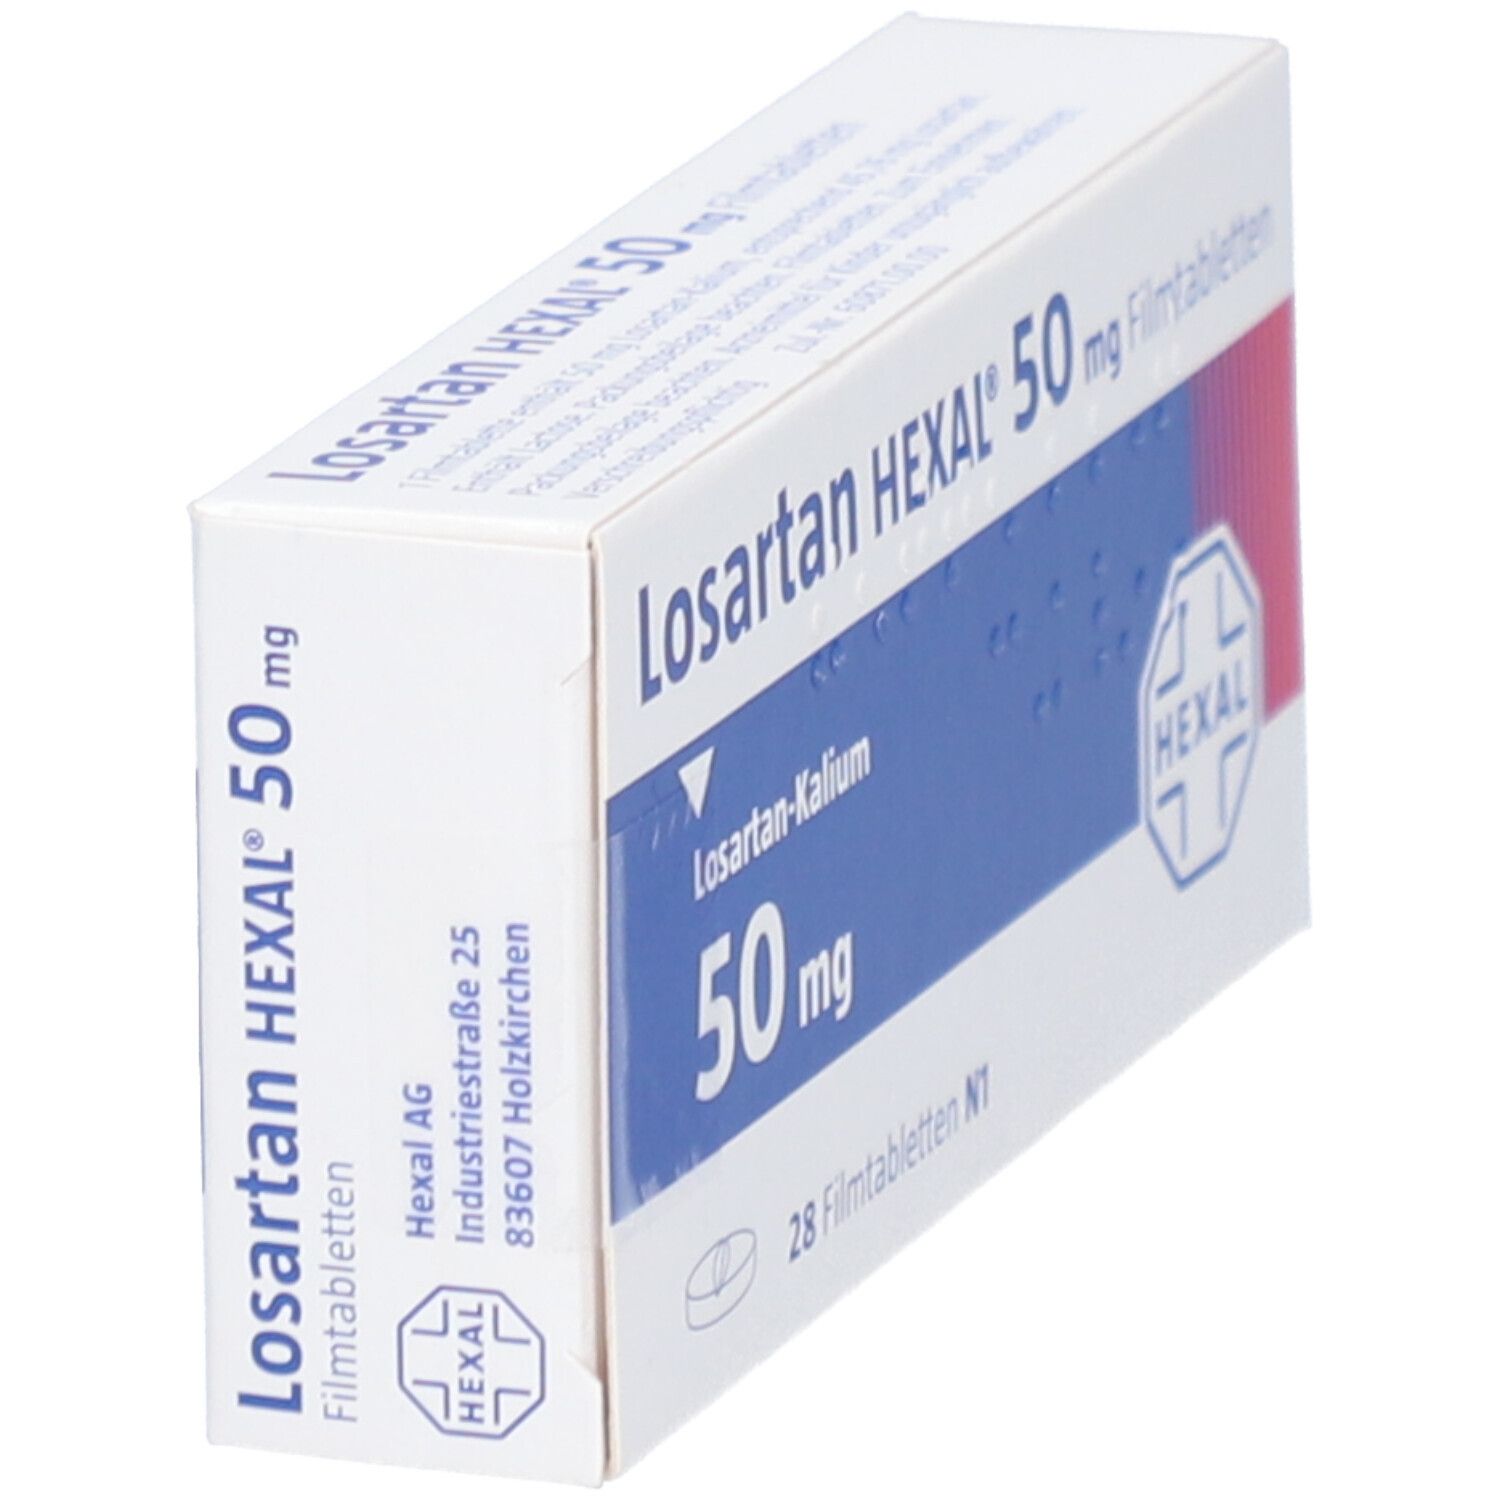 Losartan HEXAL® 50 mg